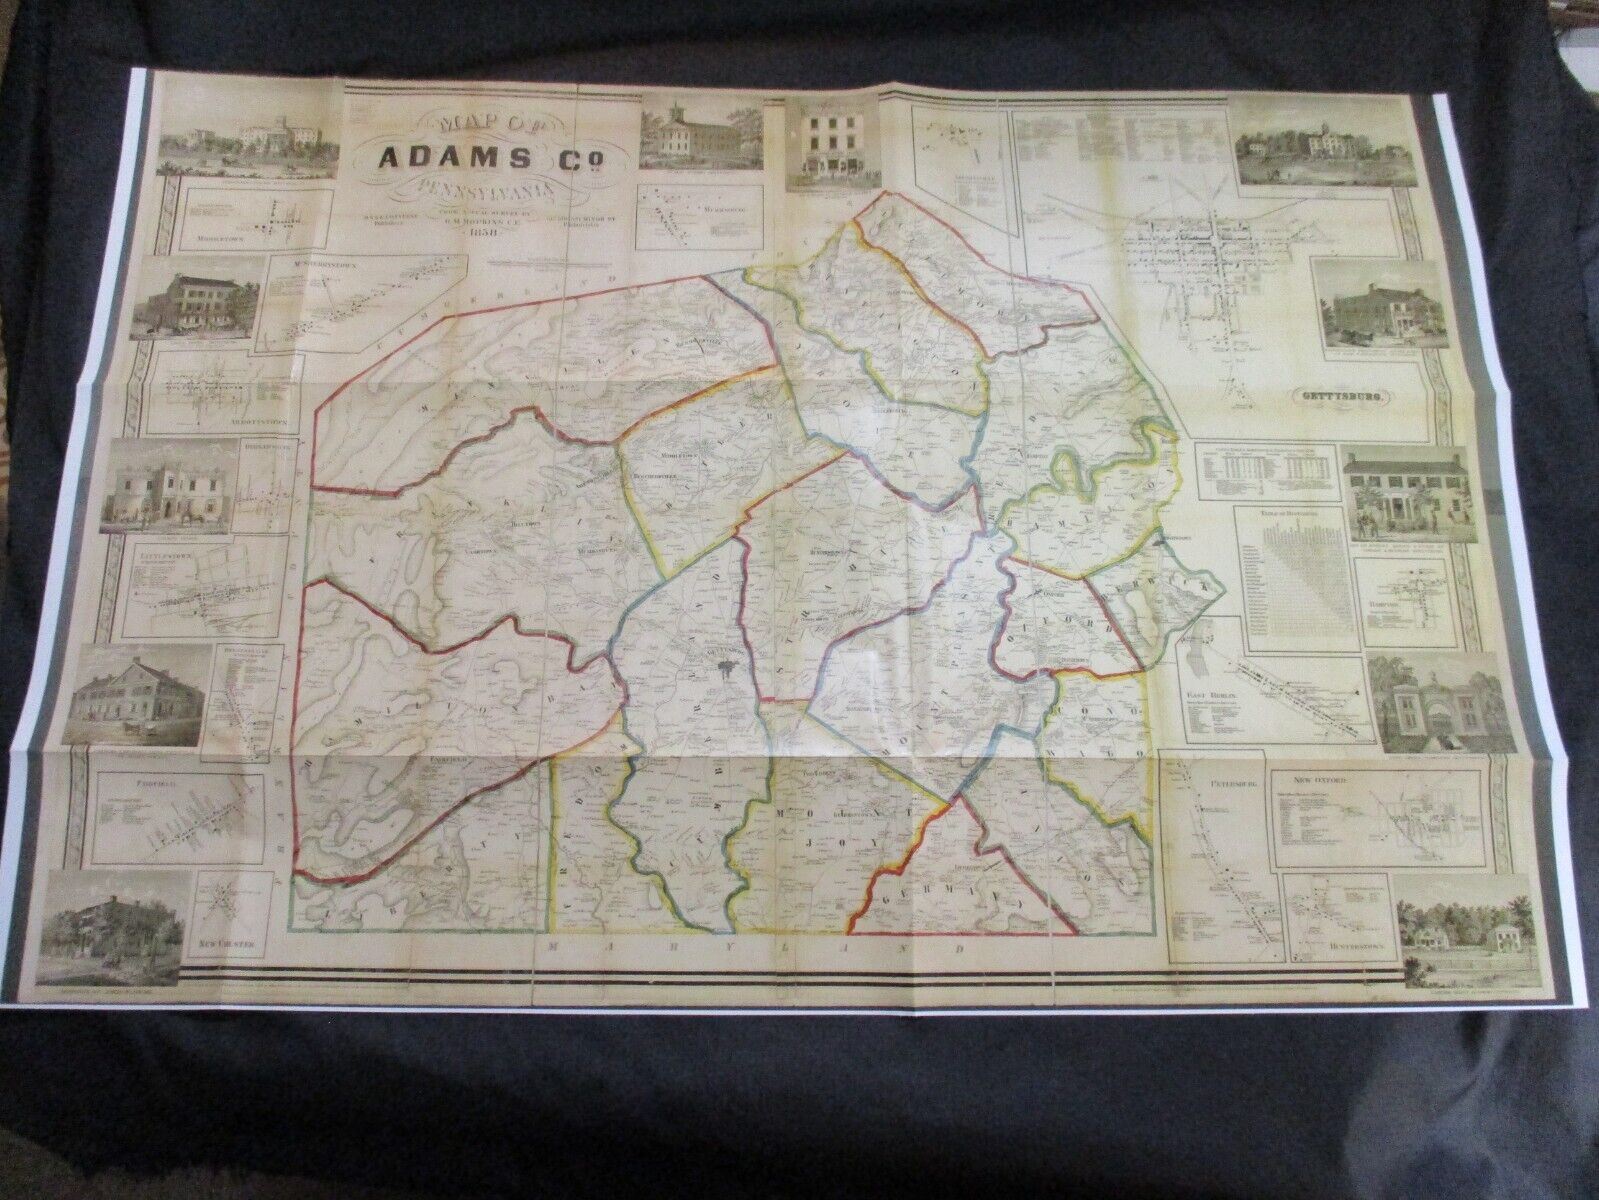 2004 Print of 1858 Adams County, Gettysburg, Pennsylvania & Area Map, Civil War